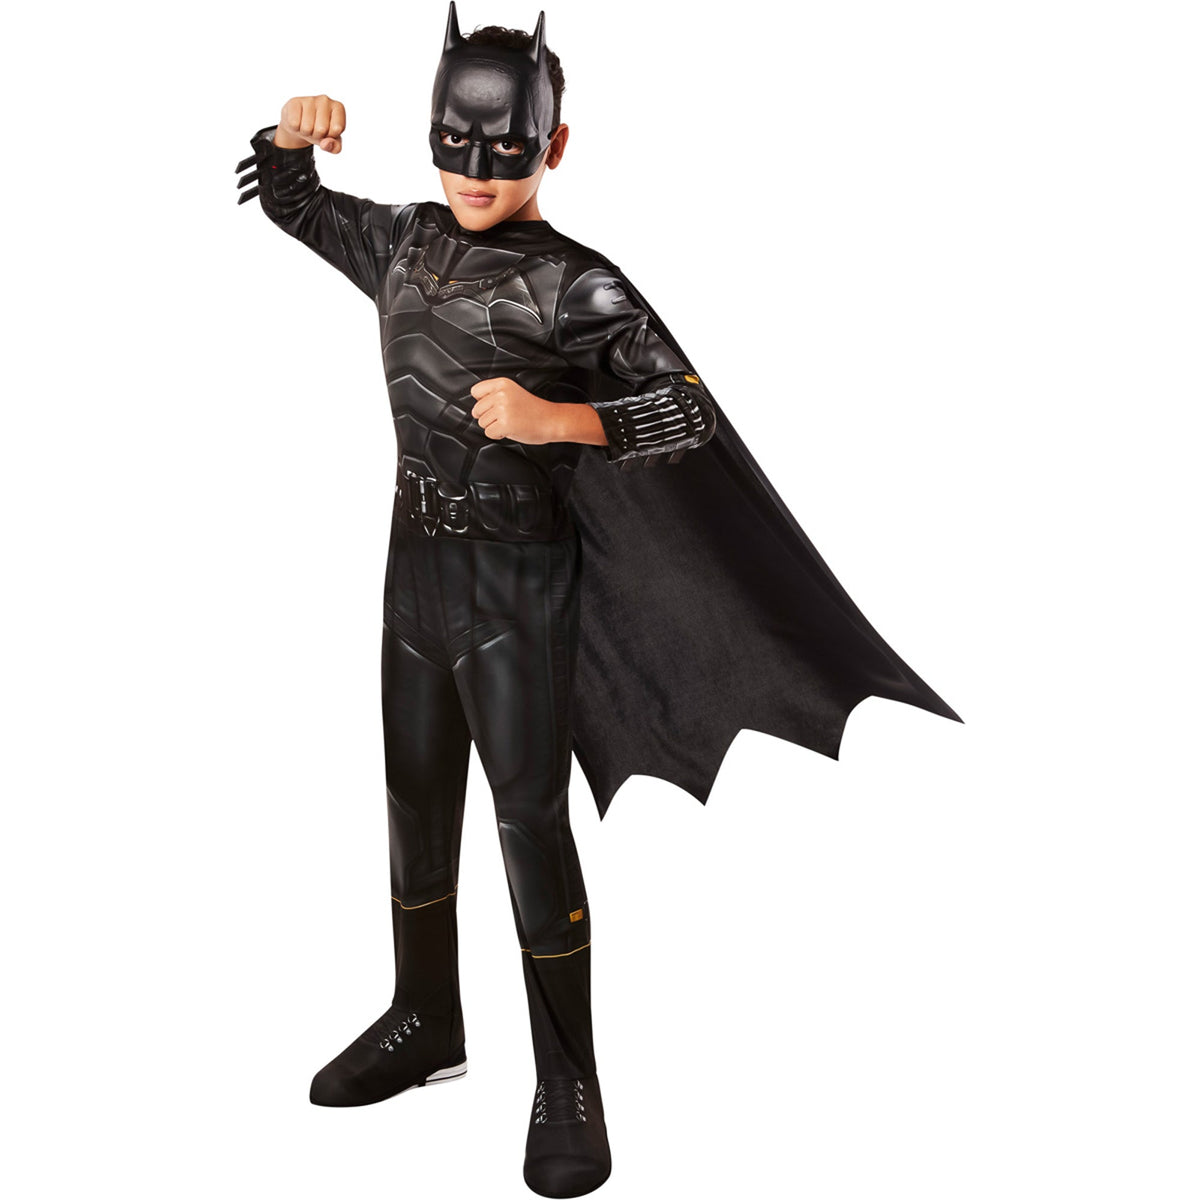 RUBIES II (Ruby Slipper Sales) Costumes DC Comics Batman Deluxe Costume for Kids, Black Jumpsuit with Detachable Cape